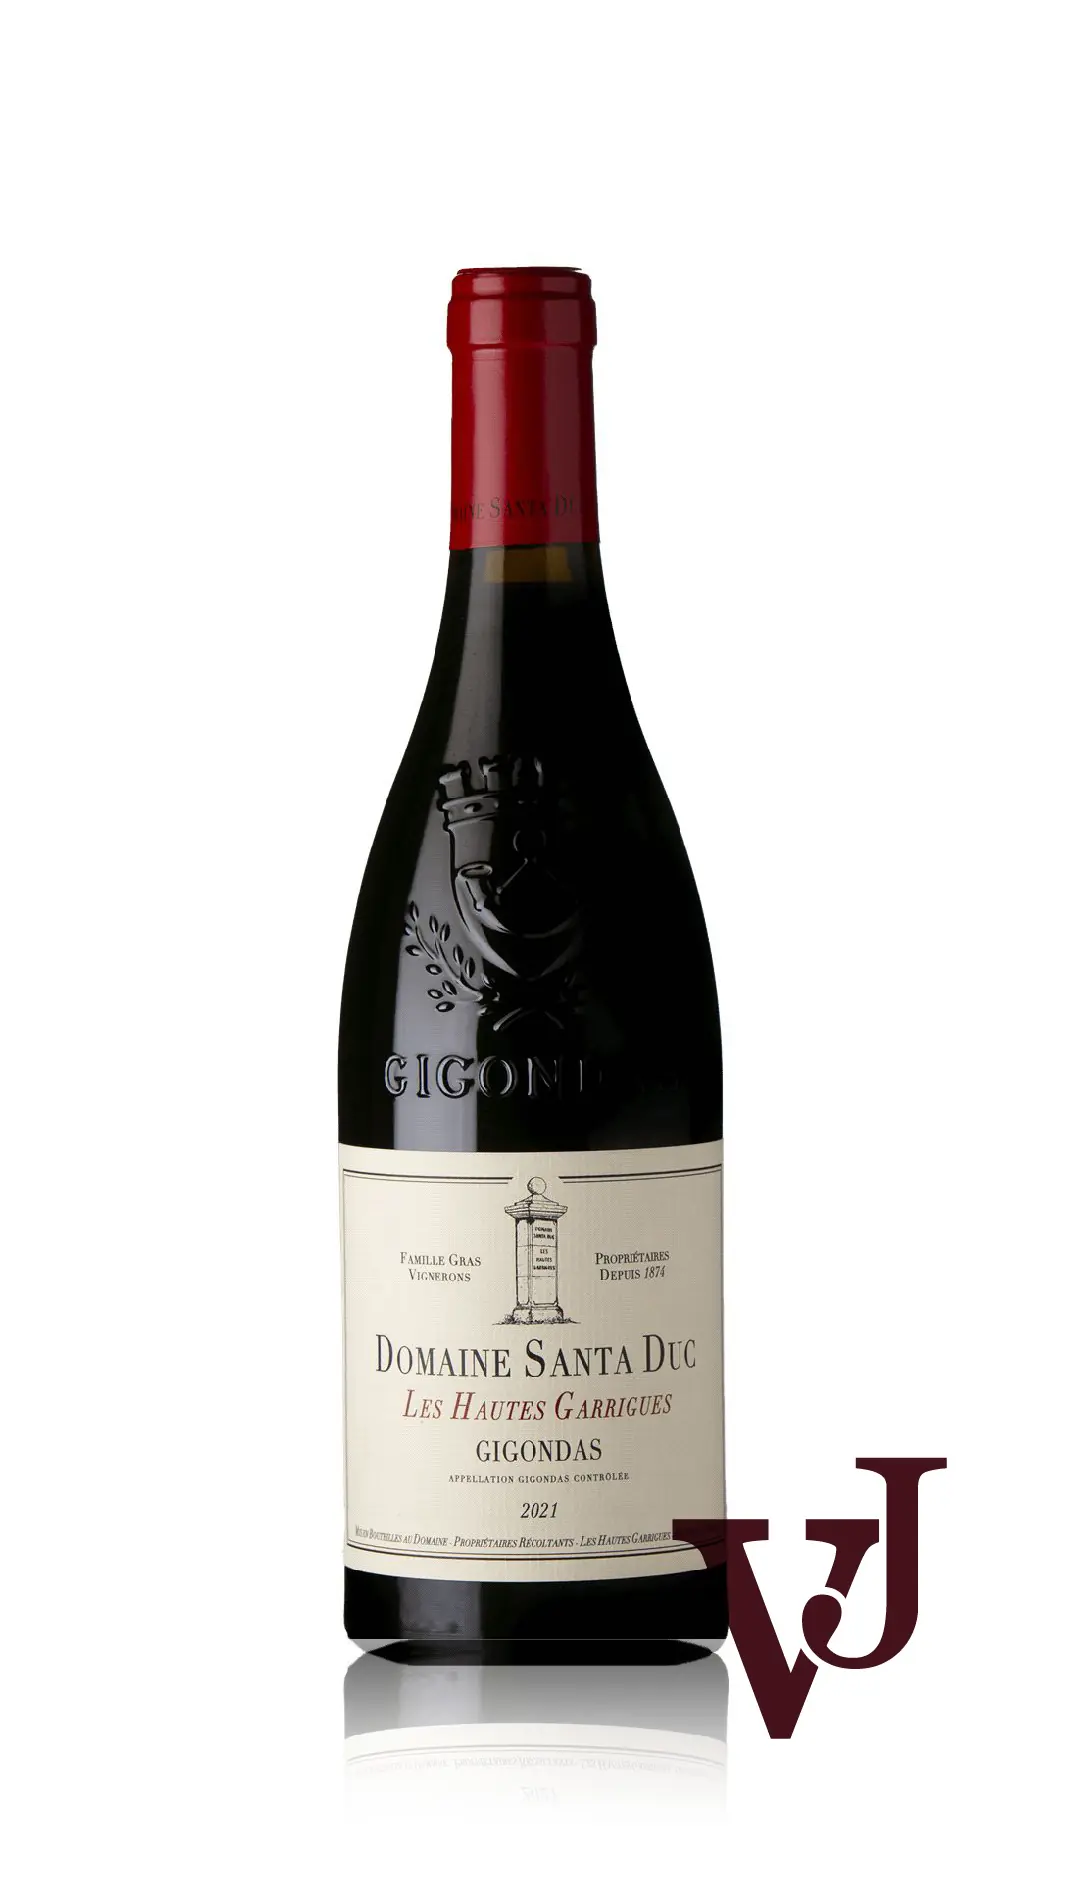 Rött vin - Domaine Santa Duc Les Hautes Garrigues 2021 artikel nummer 9423701 från producenten Domaine Santa Duc från Frankrike - Vinjournalen.se